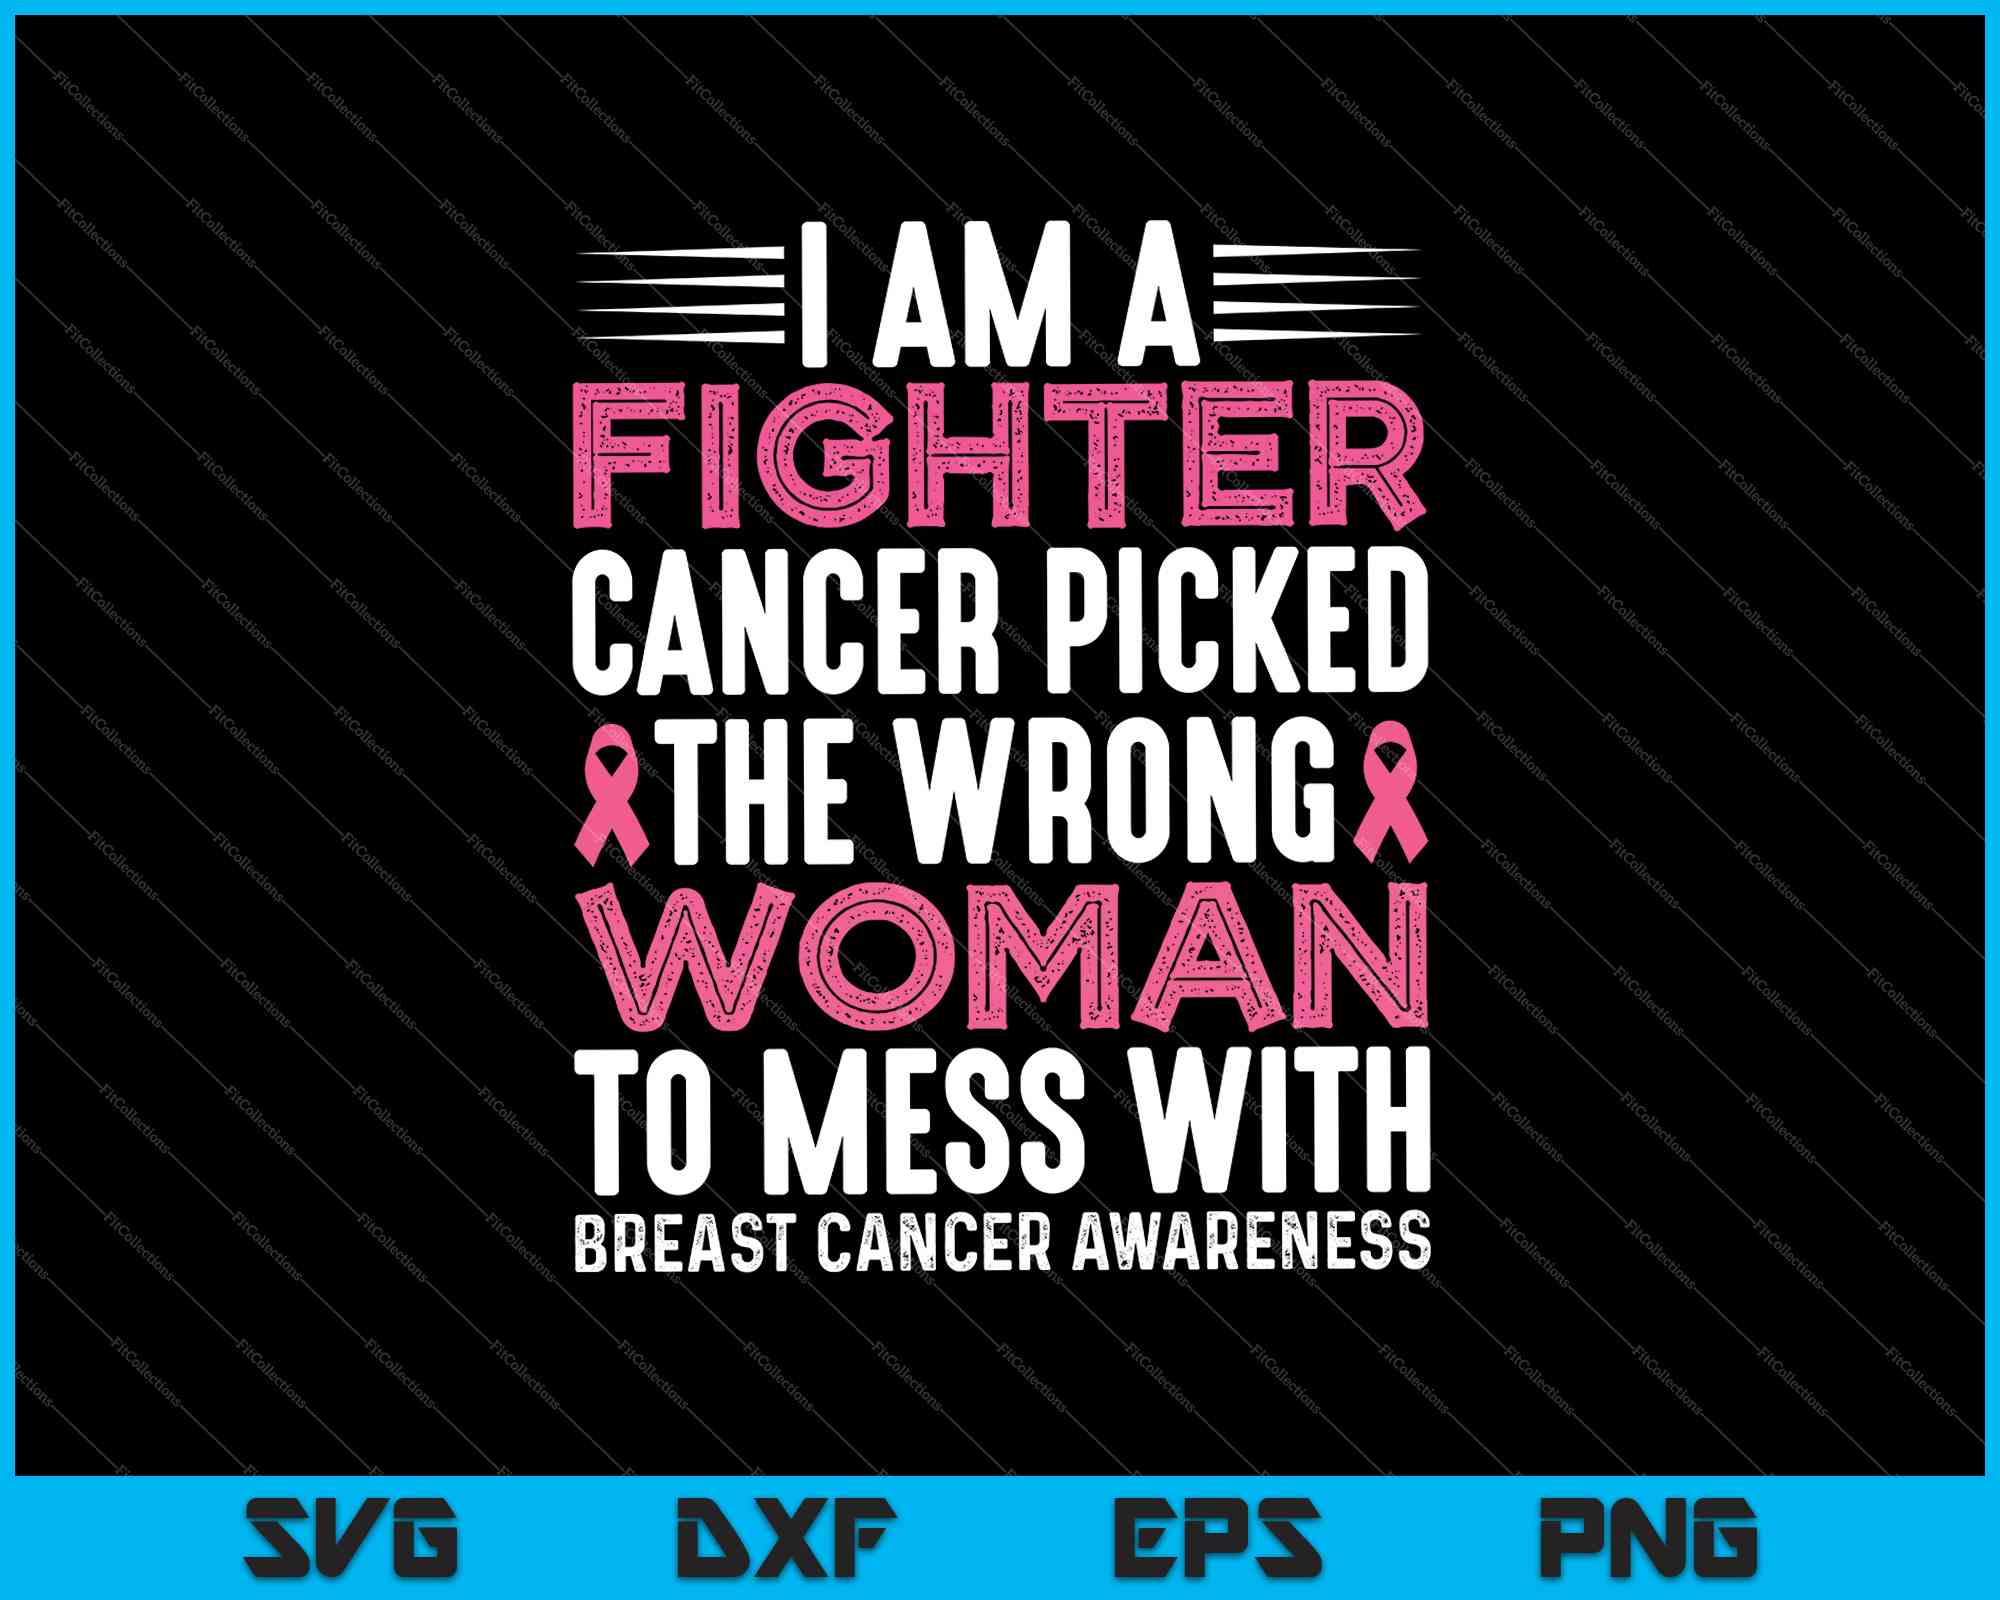 Strike Out Breast Cancer Baseball Pink Ribbon SVG PNG Files – creativeusarts